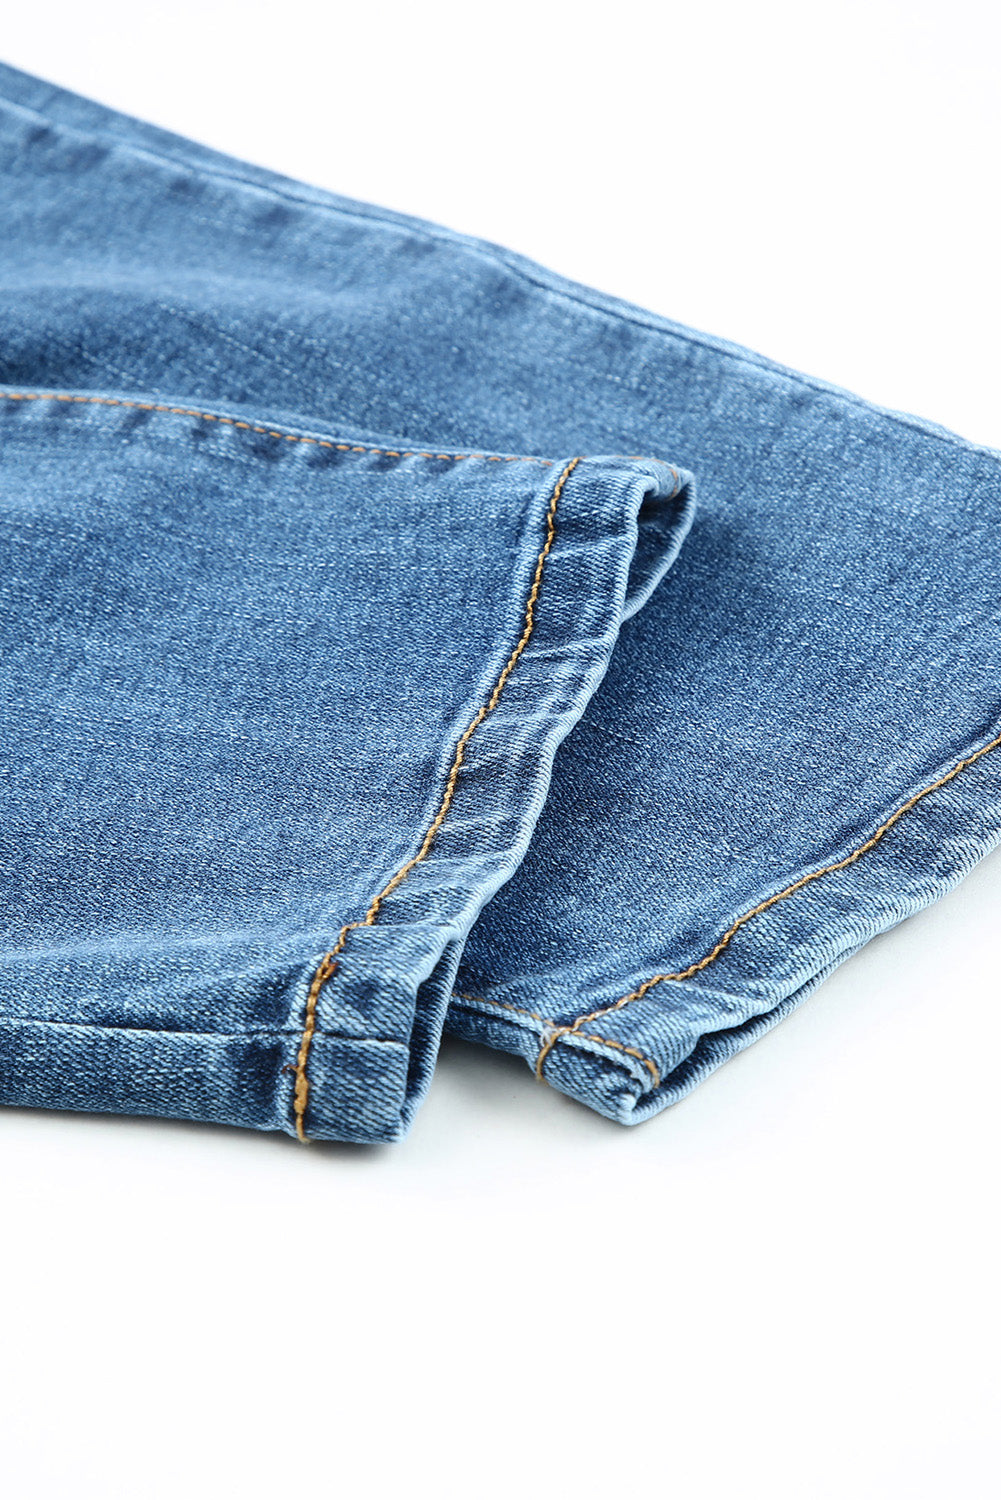 Buttoned Pockets Distressed Jeans Jeans JT's Designer Fashion